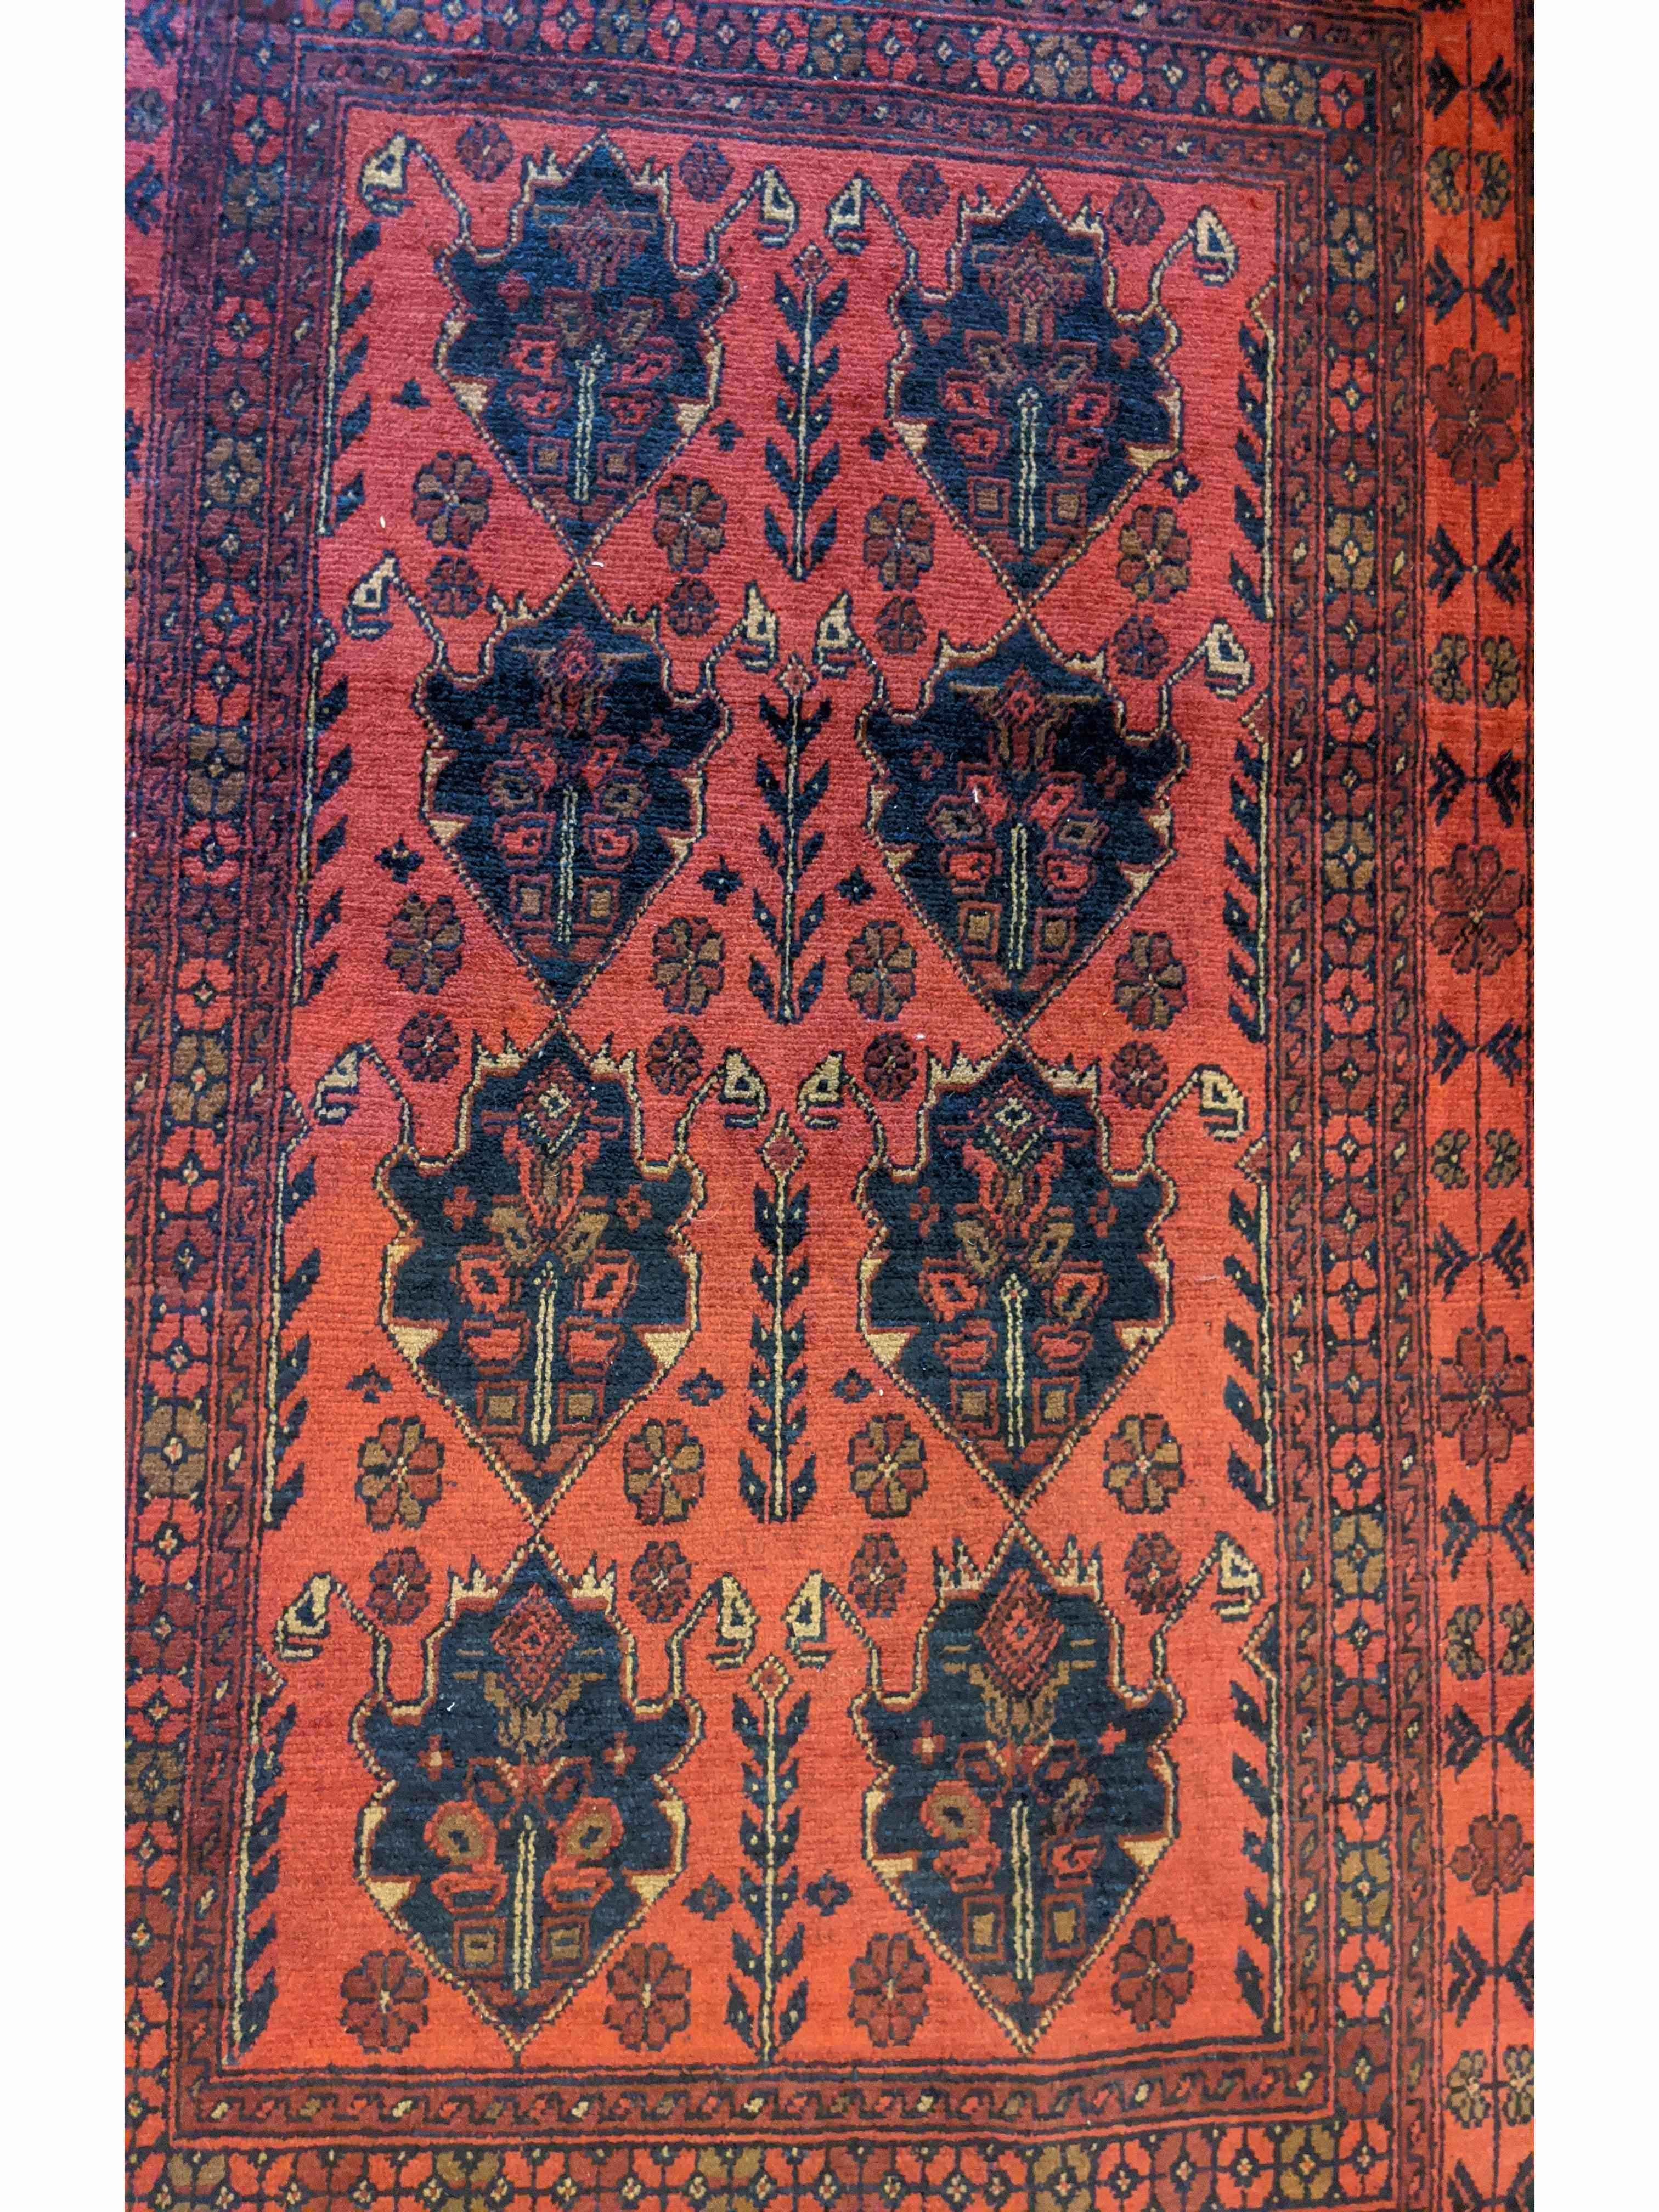 150 x 105 cm Afghan Khan Tribal Red Rug - Rugmaster